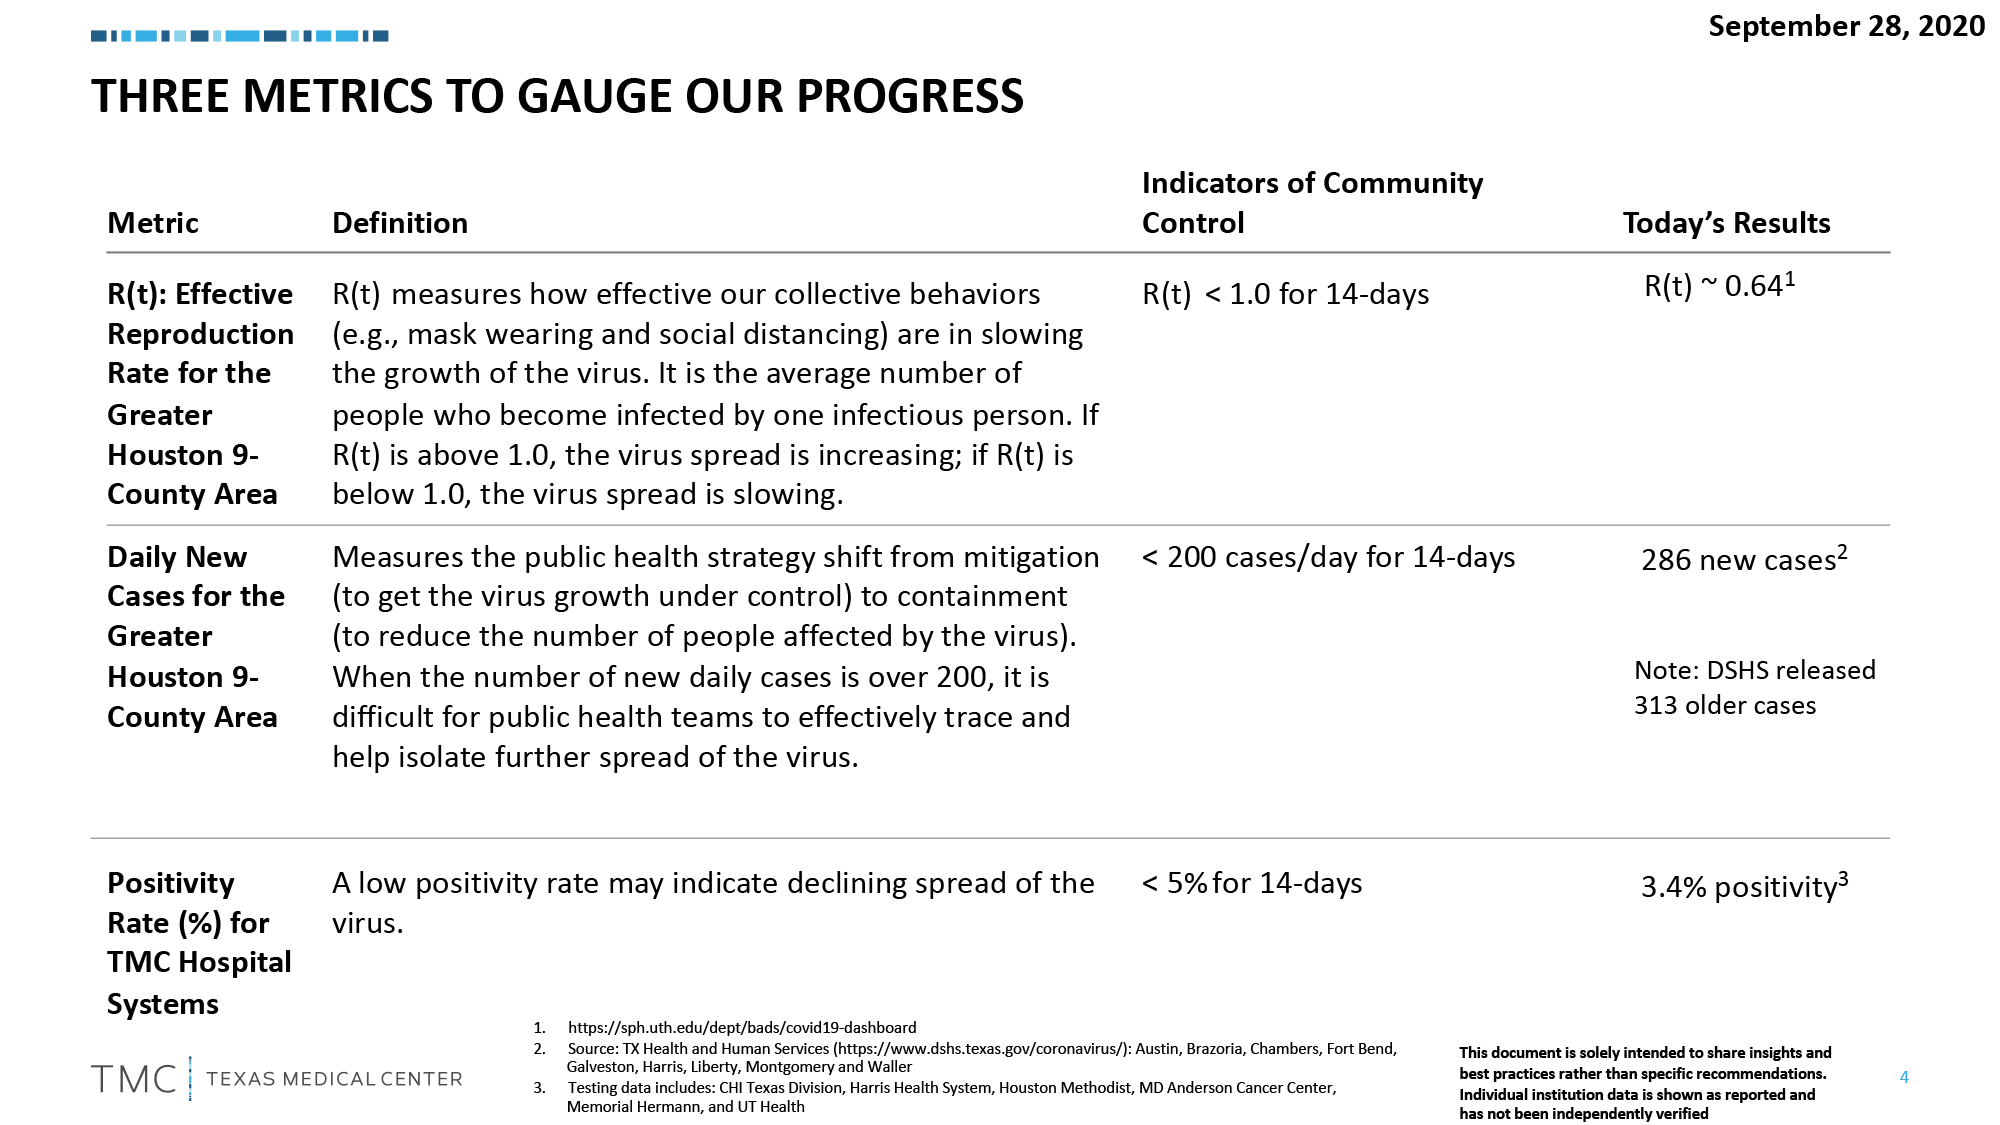 ac-Three-Metrics-To-Gauge-Our-Progress-NEW-9-29-2020.png